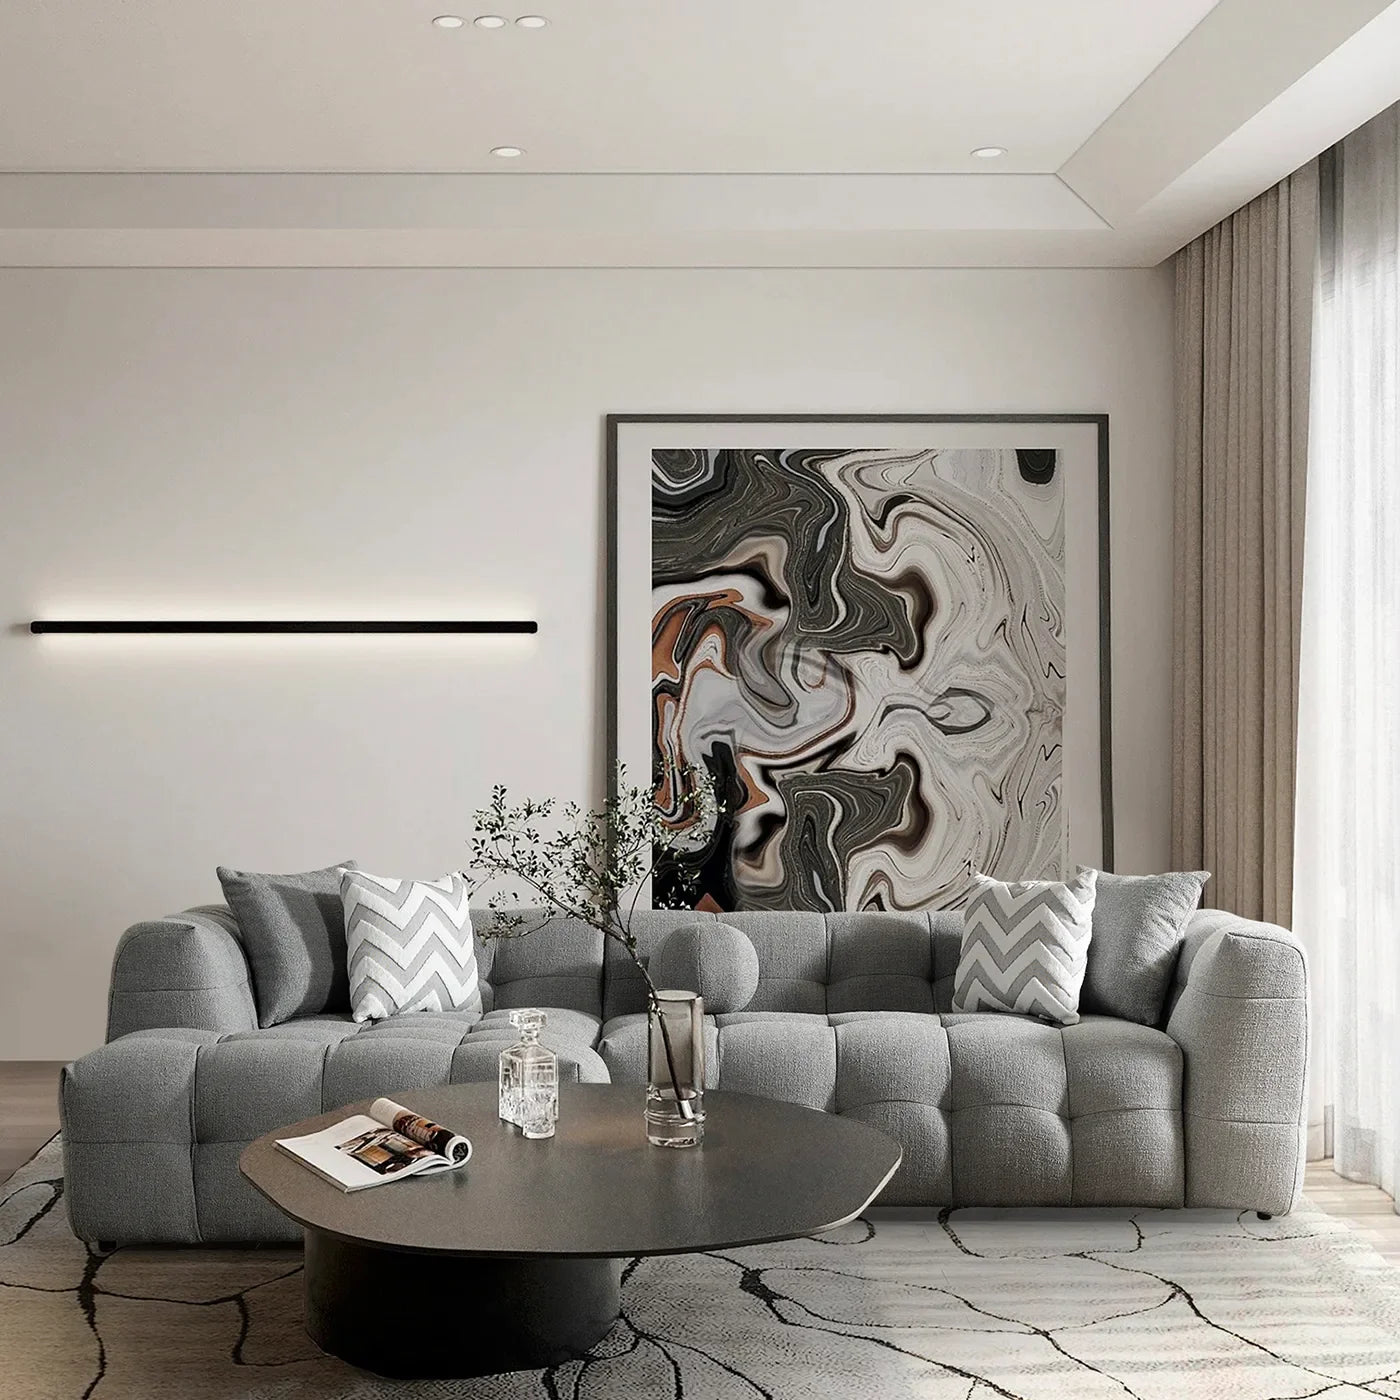 Amsterdam Sectional Sofa - Grey